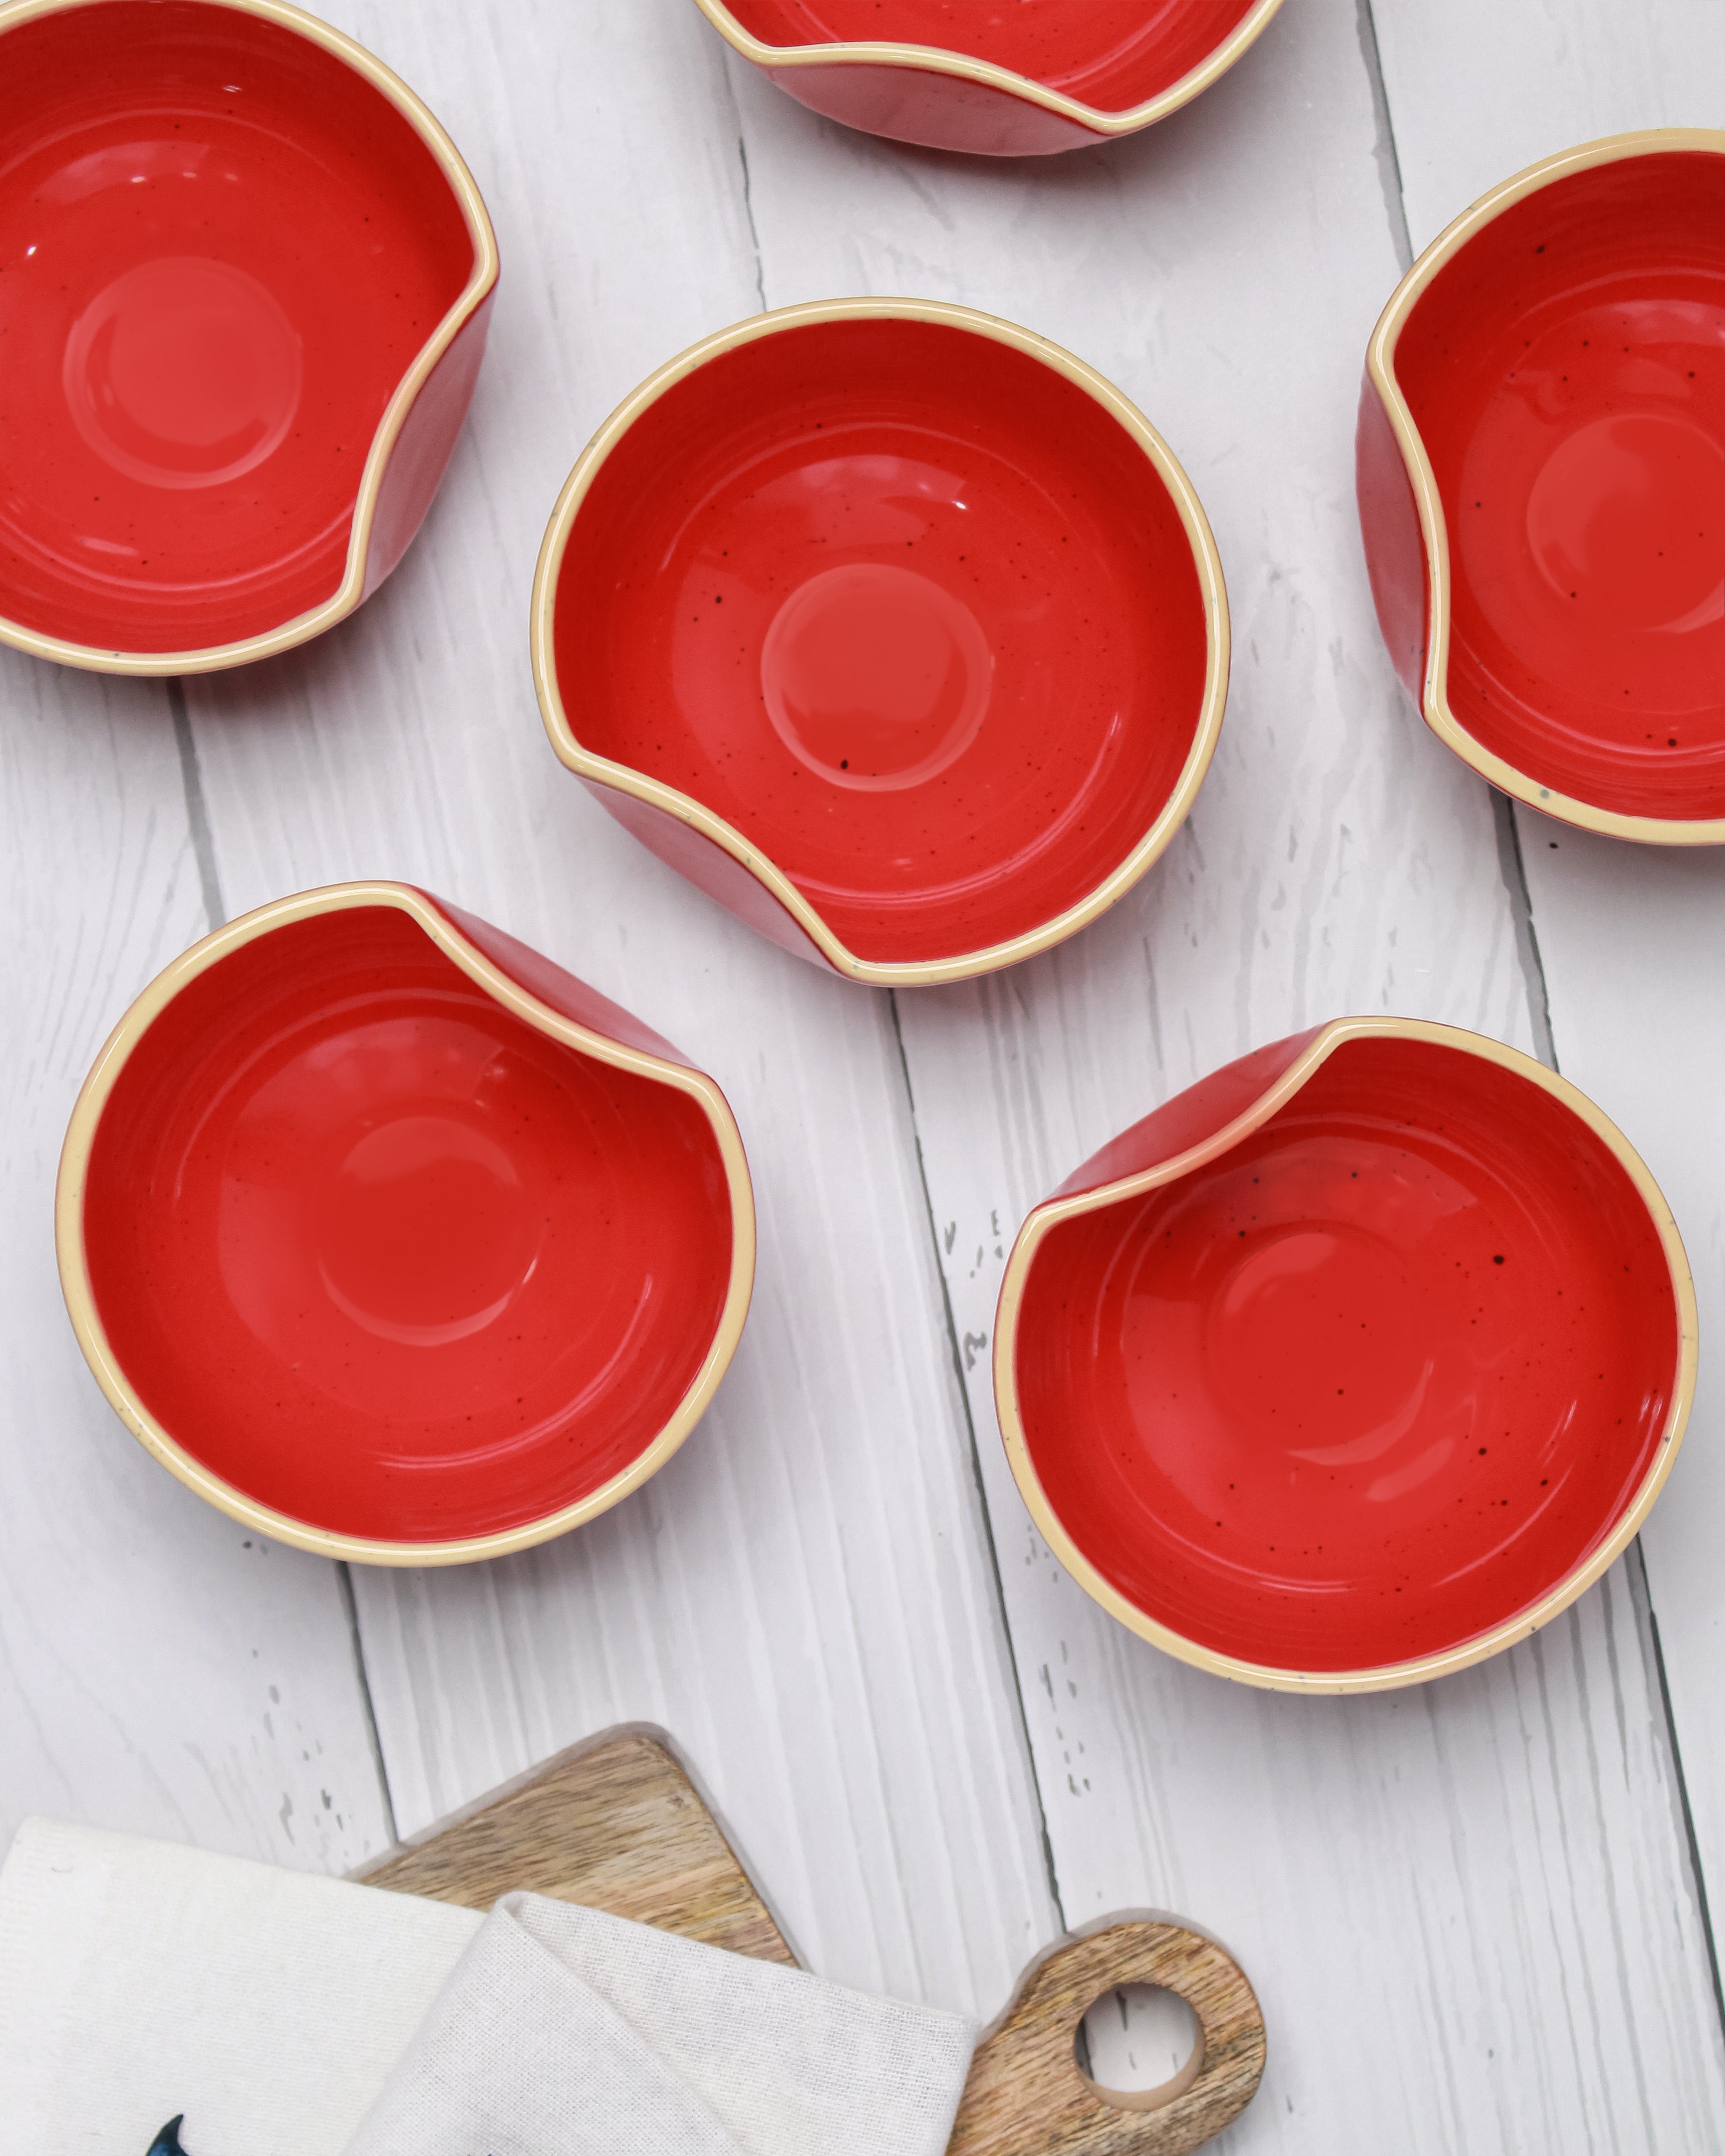 Chestnet red || Organic thumb bowl - Set of 6